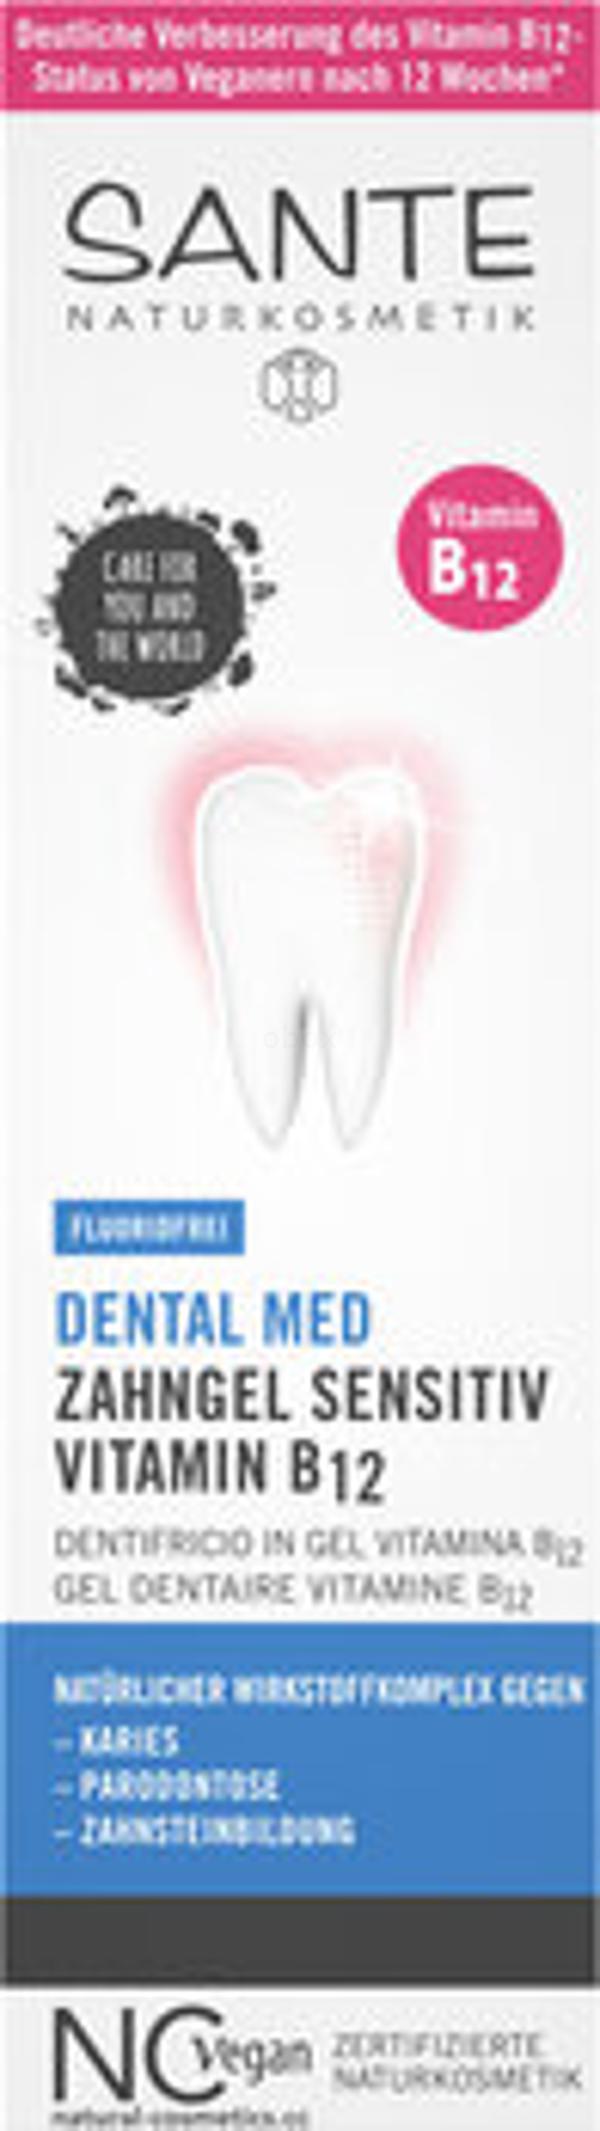 Produktfoto zu Zahngel Vitamin B12 fluoridfrei [75ml]